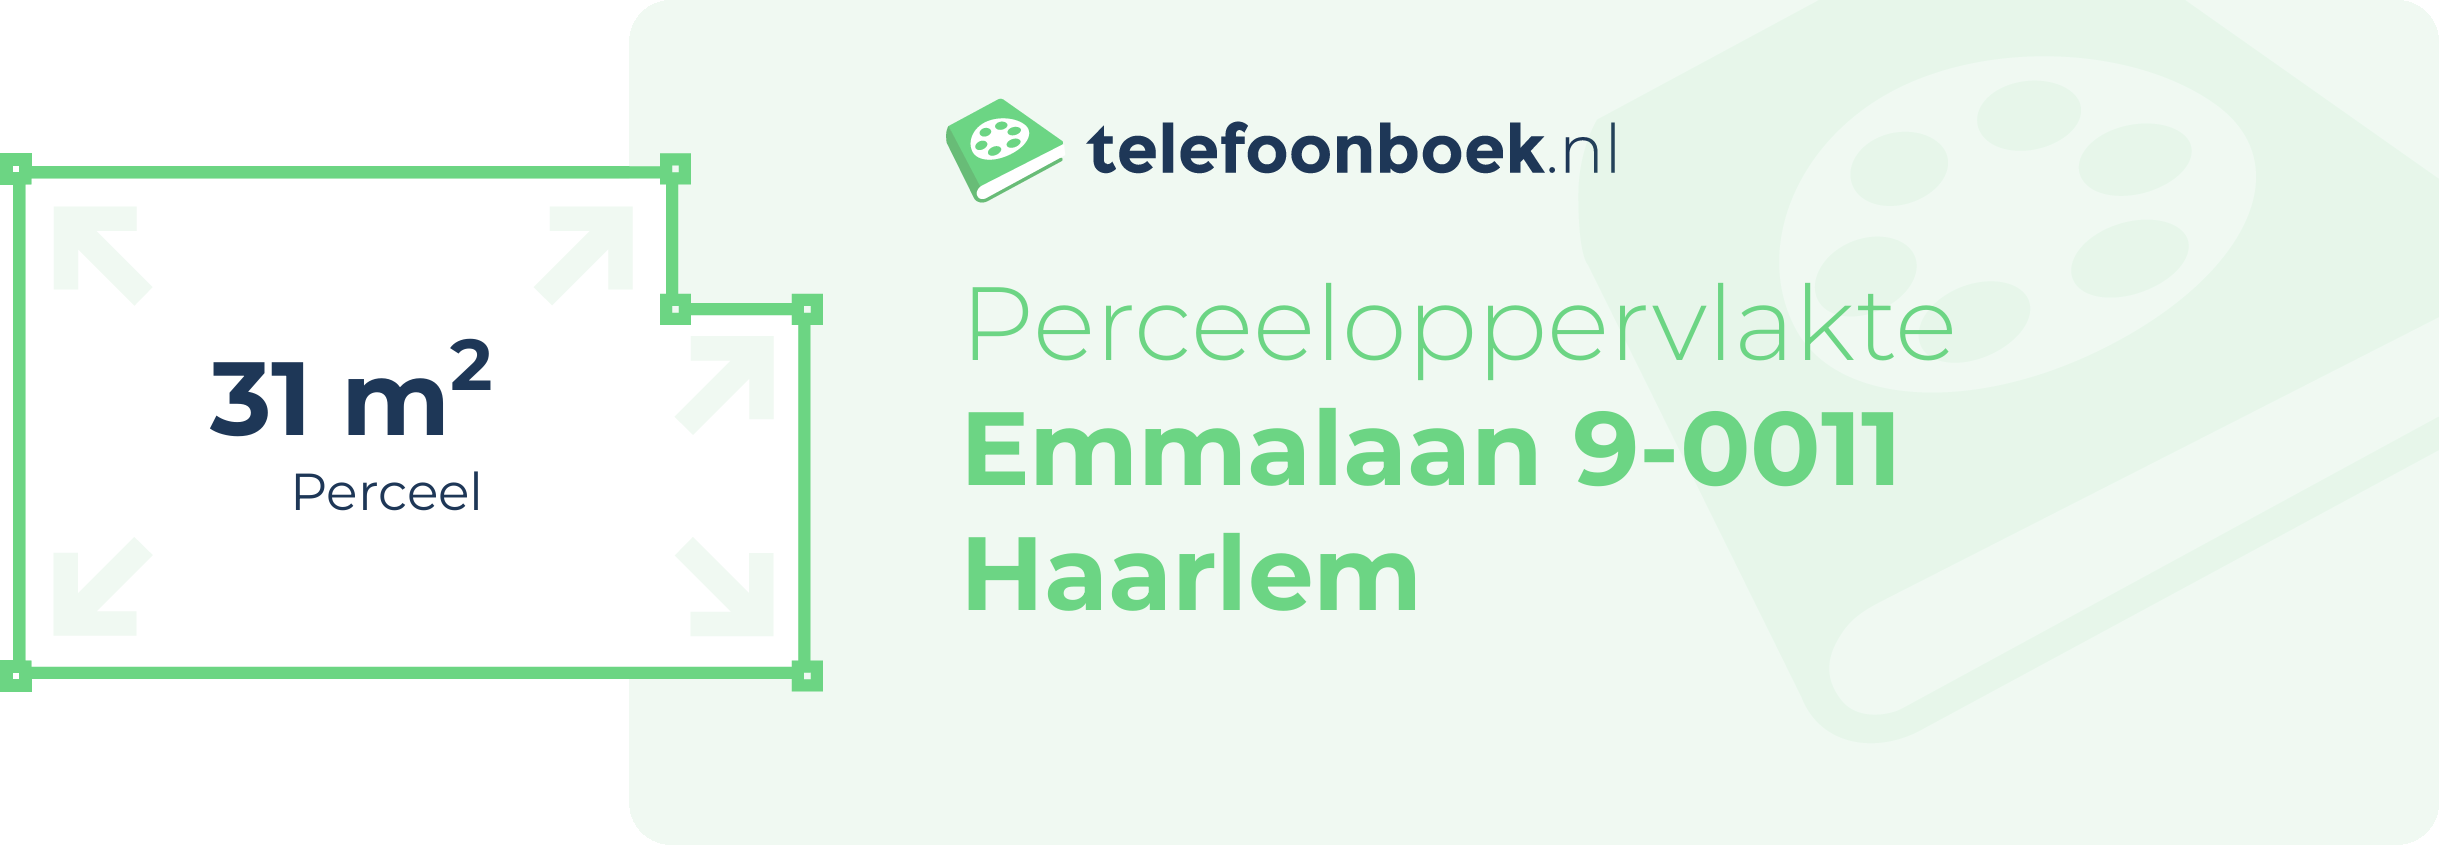 Perceeloppervlakte Emmalaan 9-0011 Haarlem